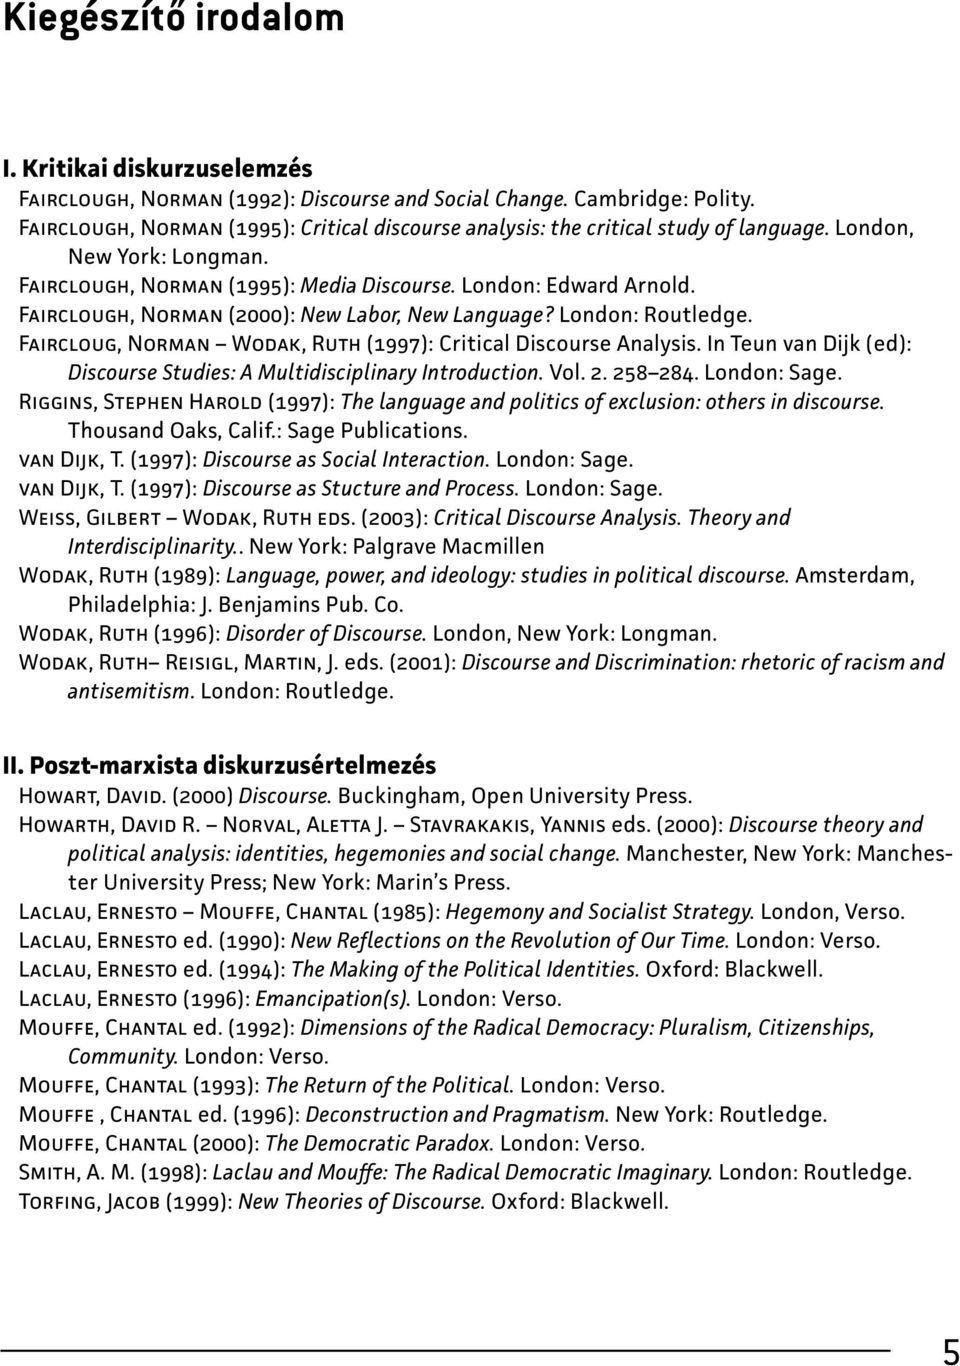 Fairclough, Norman (2000): New Labor, New Language? London: Routledge. Faircloug, Norman Wodak, Ruth (1997): Critical Discourse Analysis.